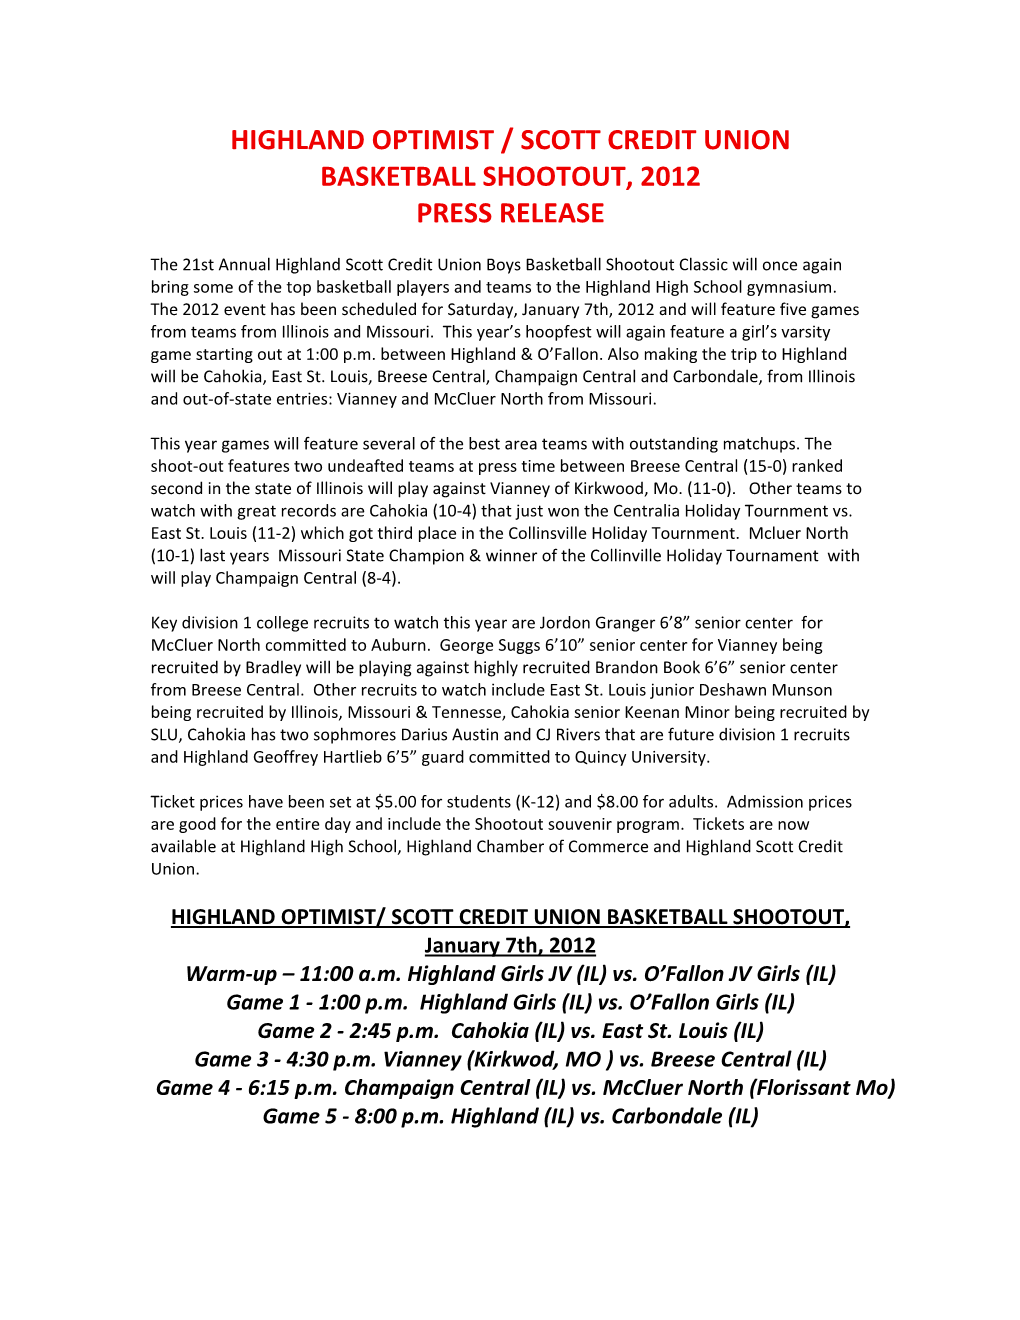 Highland Optimist / Scott Credit Union Basketball Shootout, 2012 Press Release